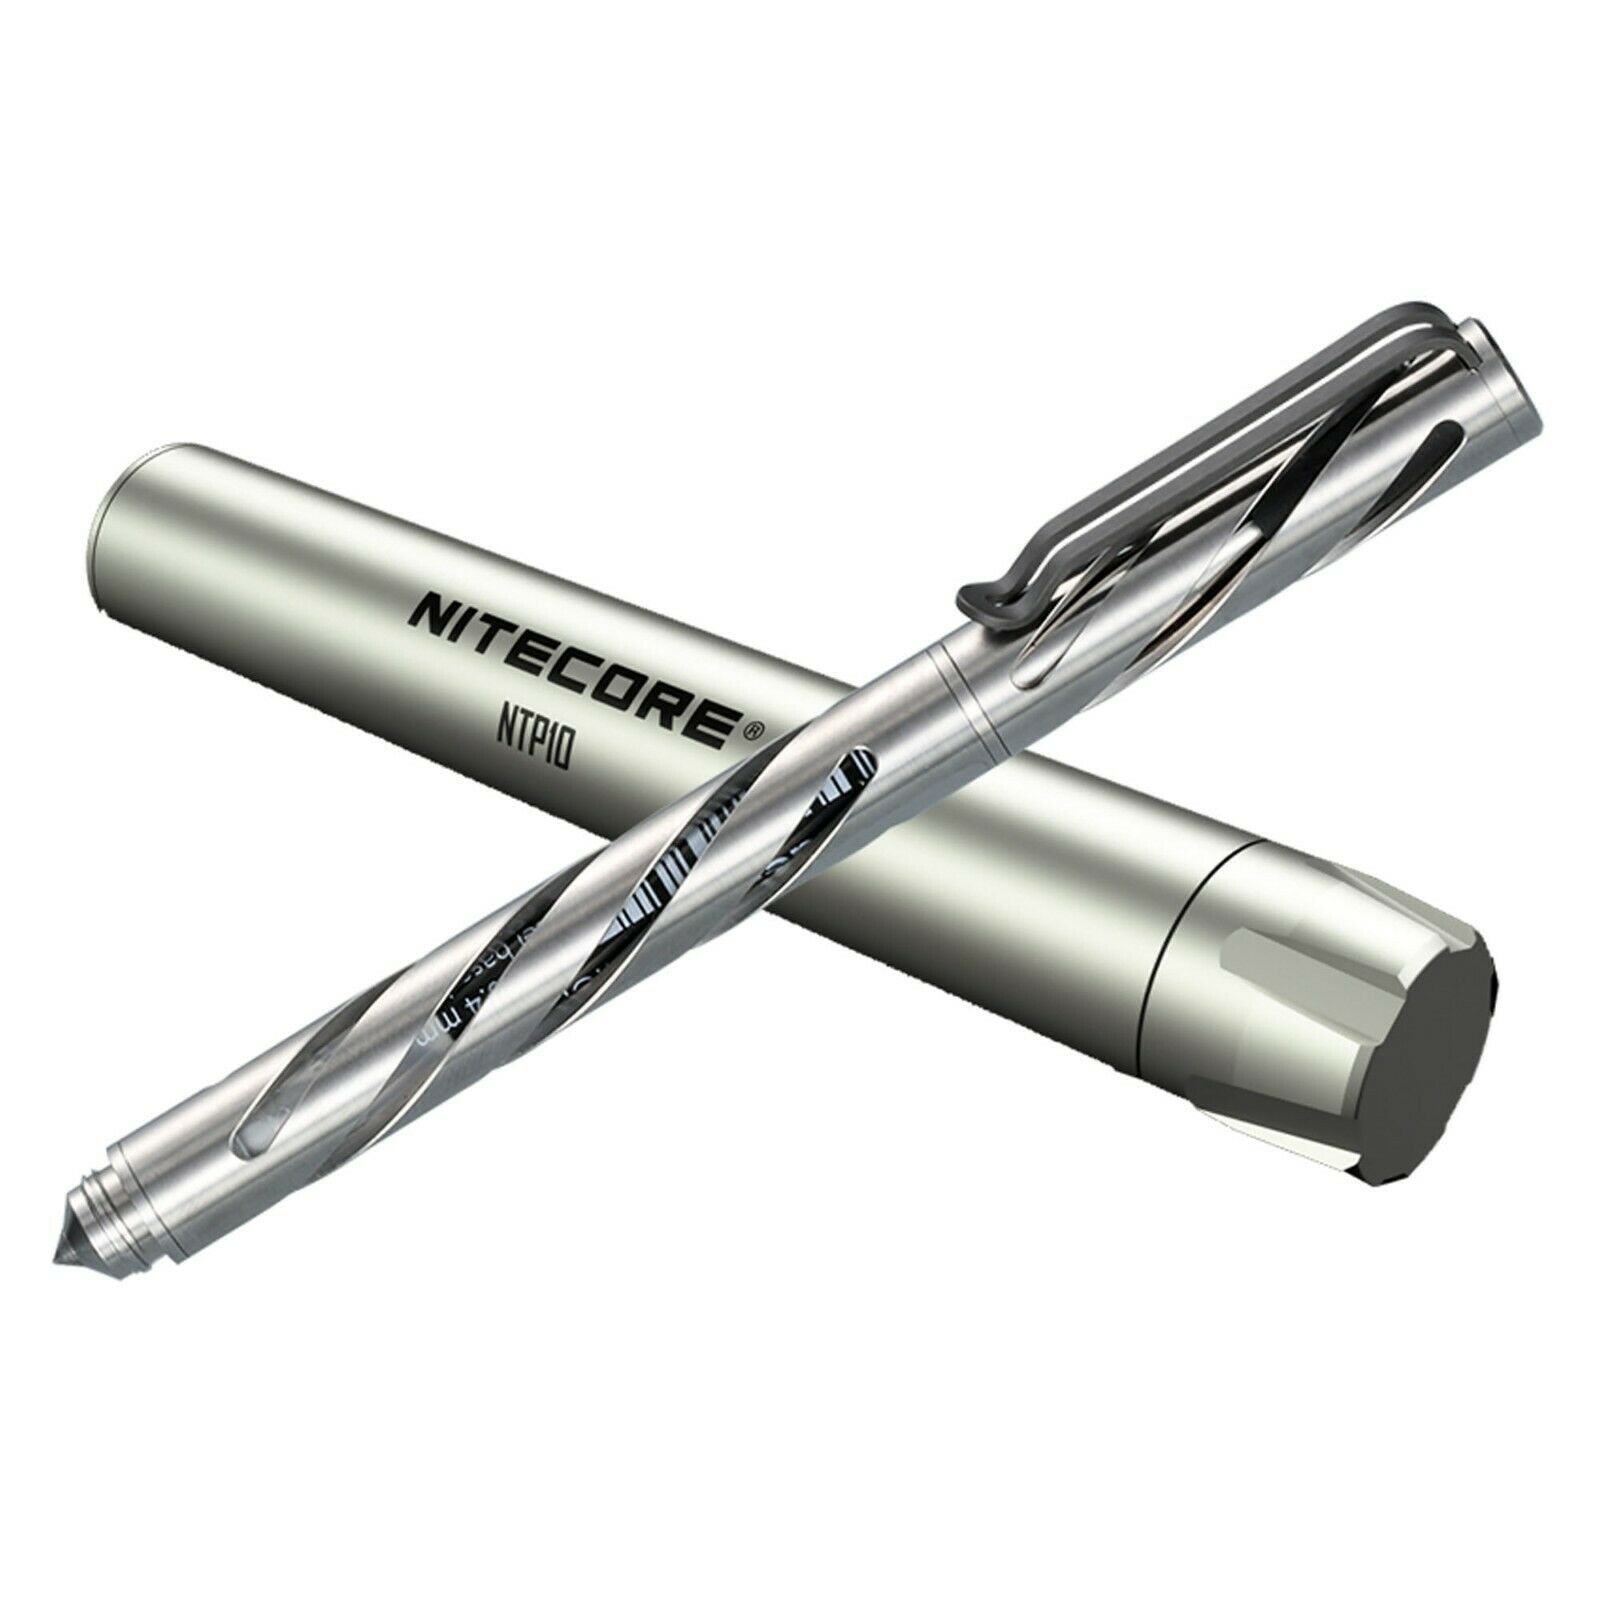 NiteCore NTP10 Titanium Tactical Pen w/ Tungsten Steel Tip